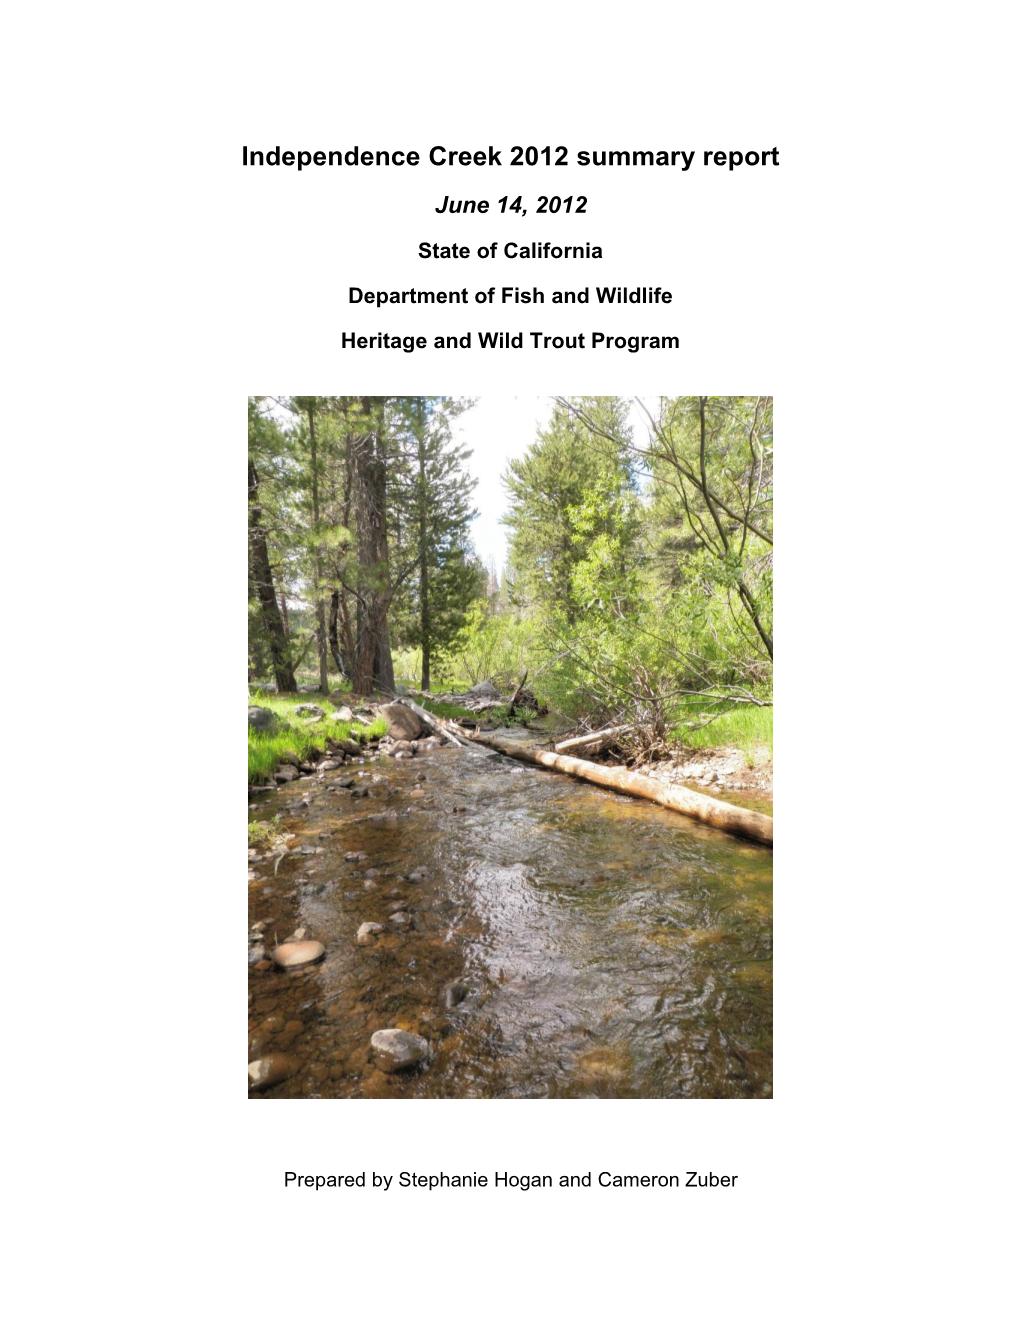 Independence Creek 2012 Summary Report